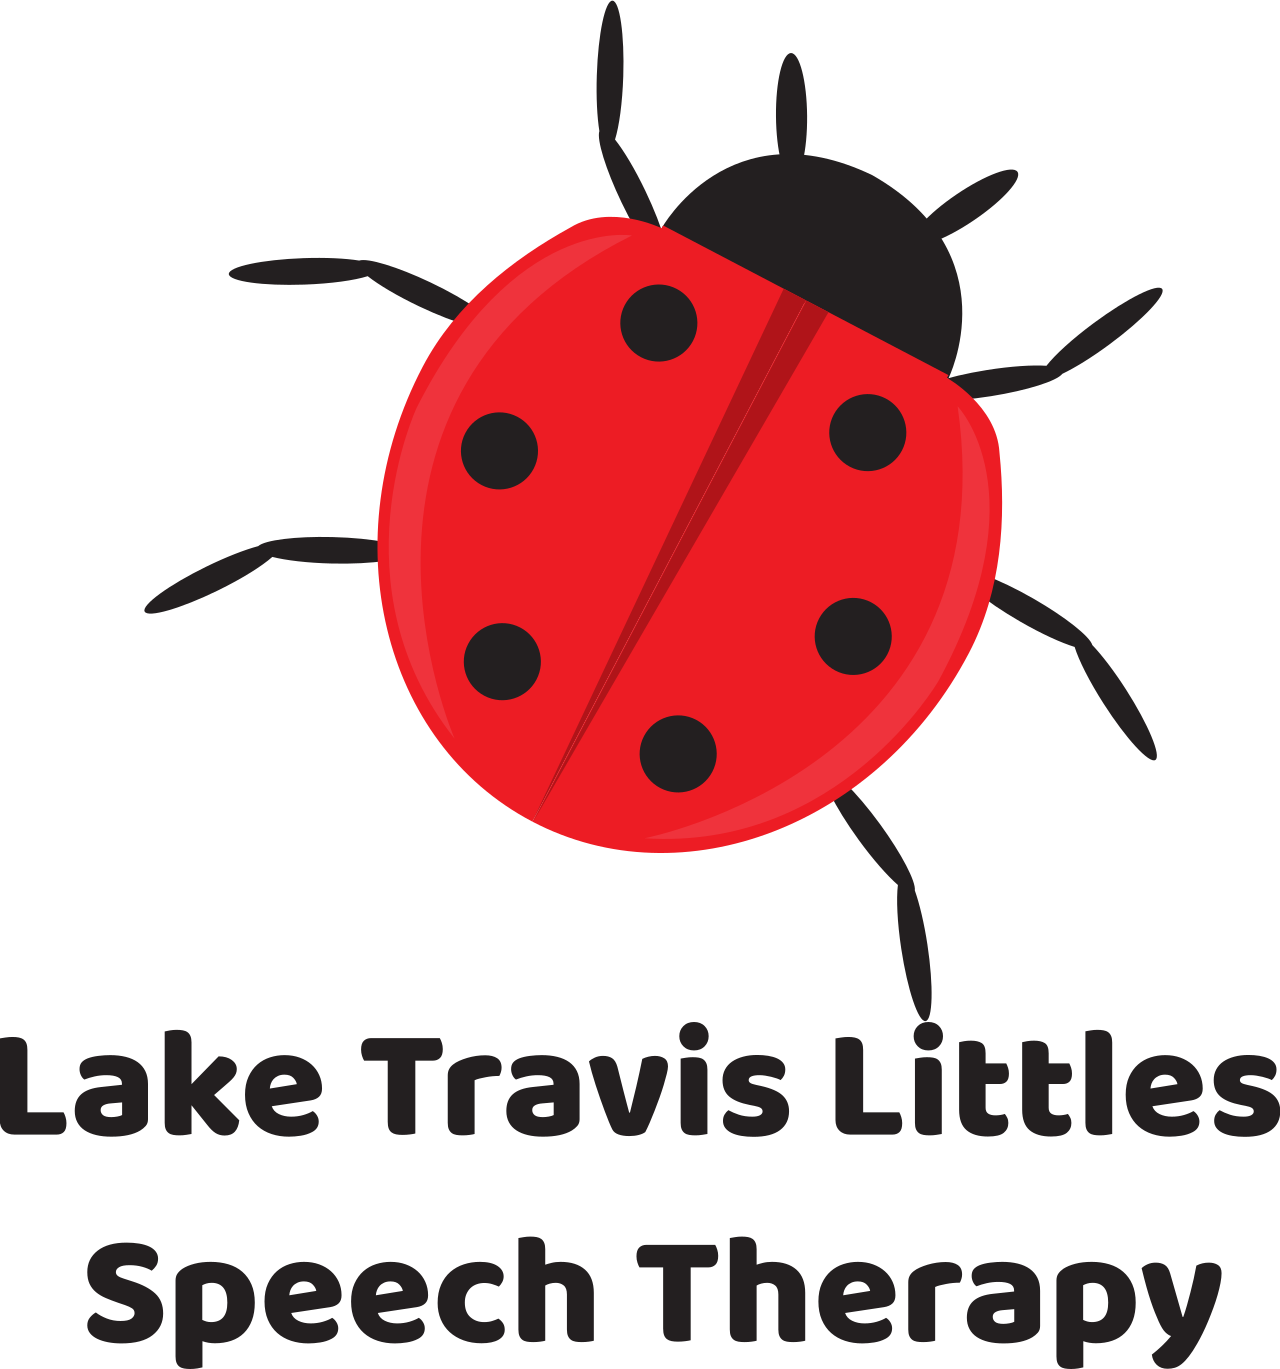 Lake Travis Littles 
Speech Therapy's logo